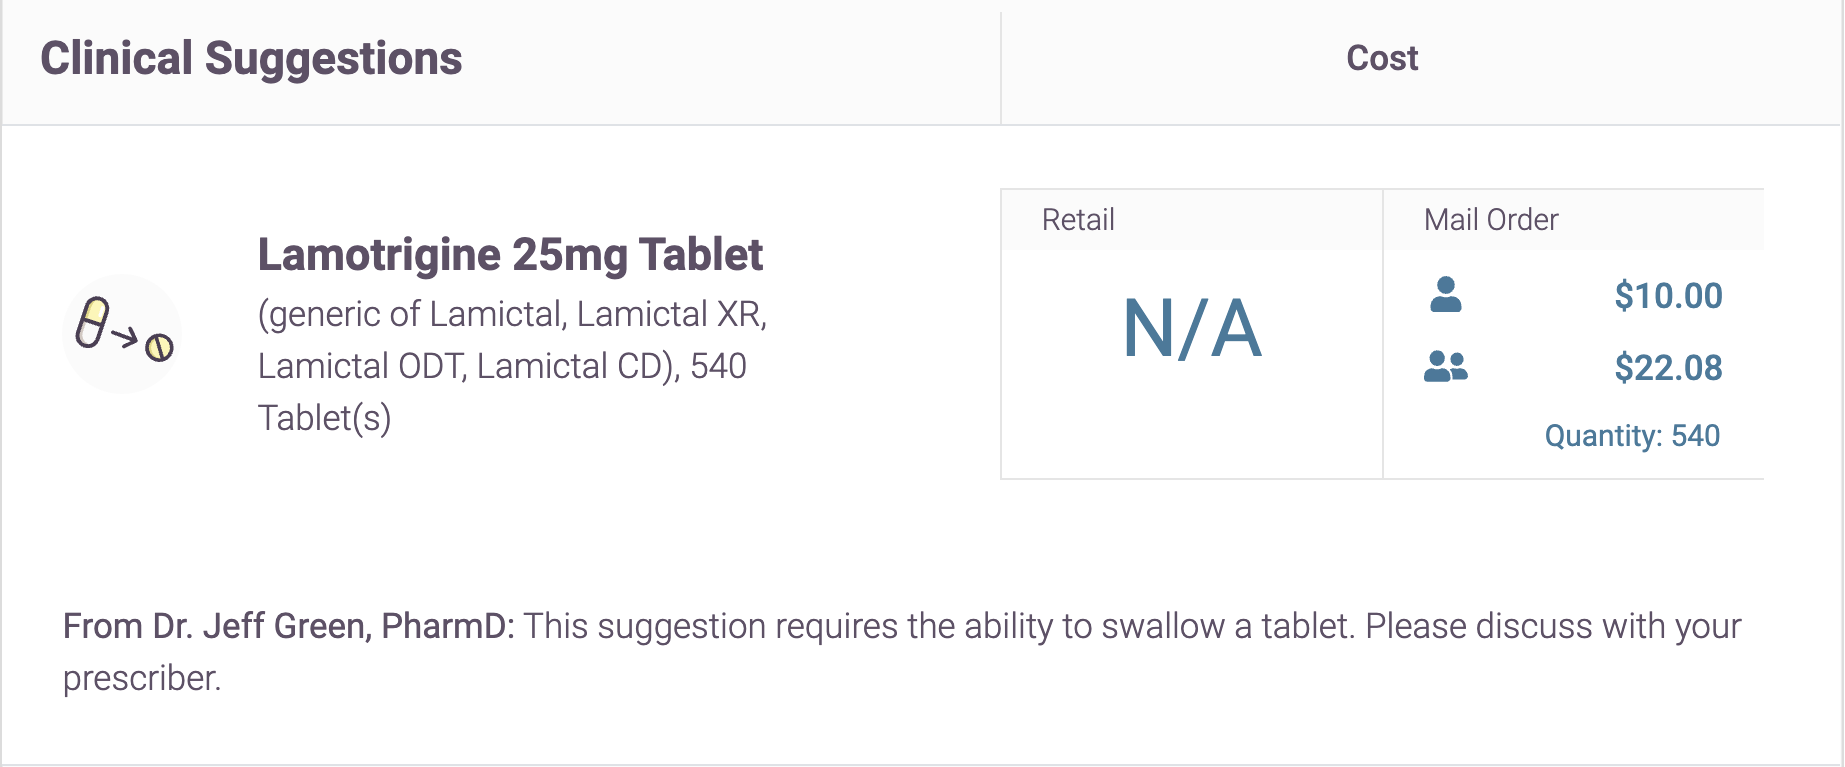 Member portal listing prices for alternative of Lamotrigine 25mg tablets